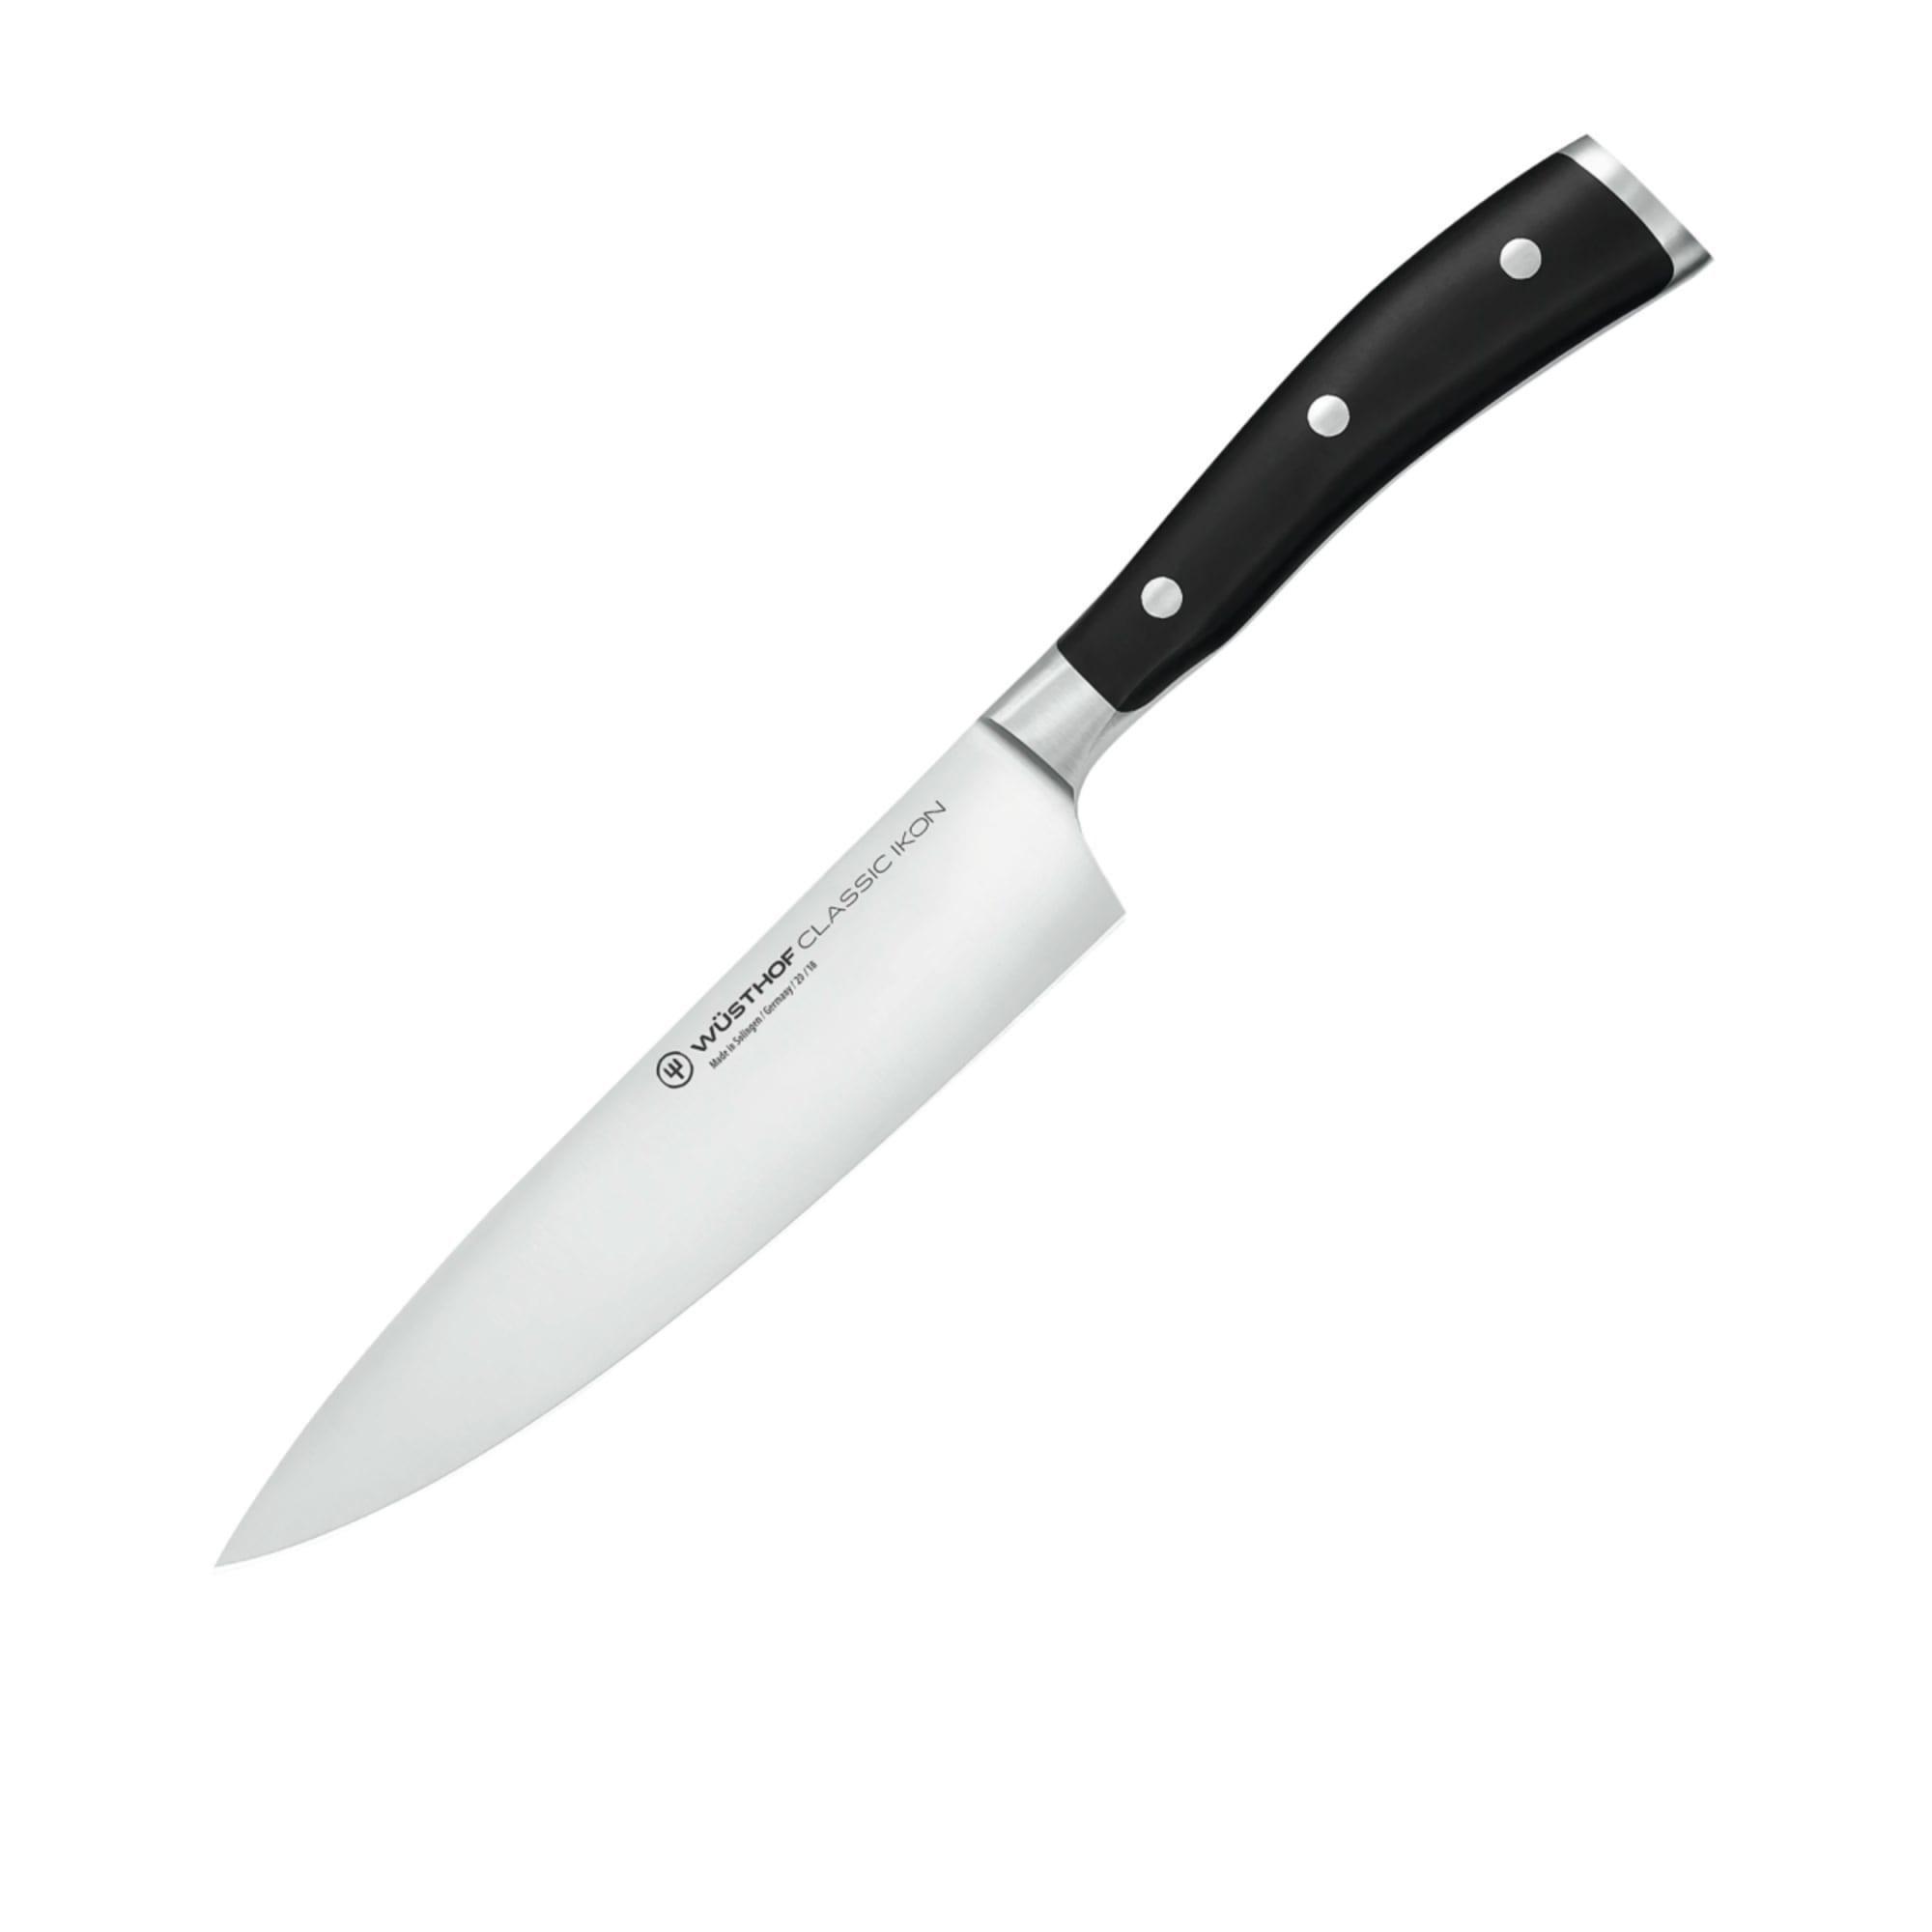 Wusthof Classic Ikon Chef's Knife 18cm Image 1